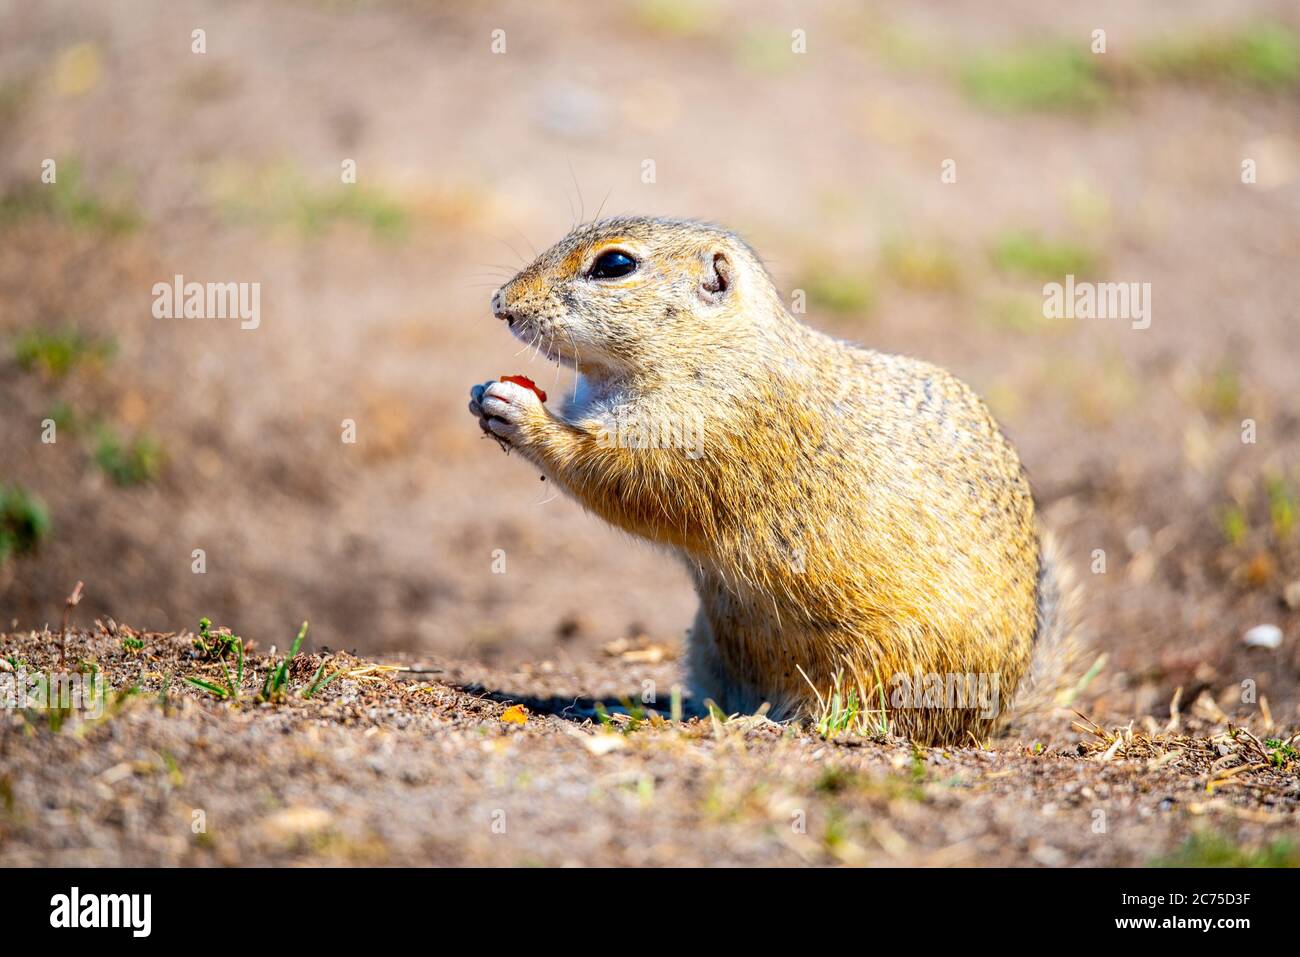 European ground squirrel, Spermophilus citellus, aka European souslik. Small cute rodent in natural habitat. Stock Photo